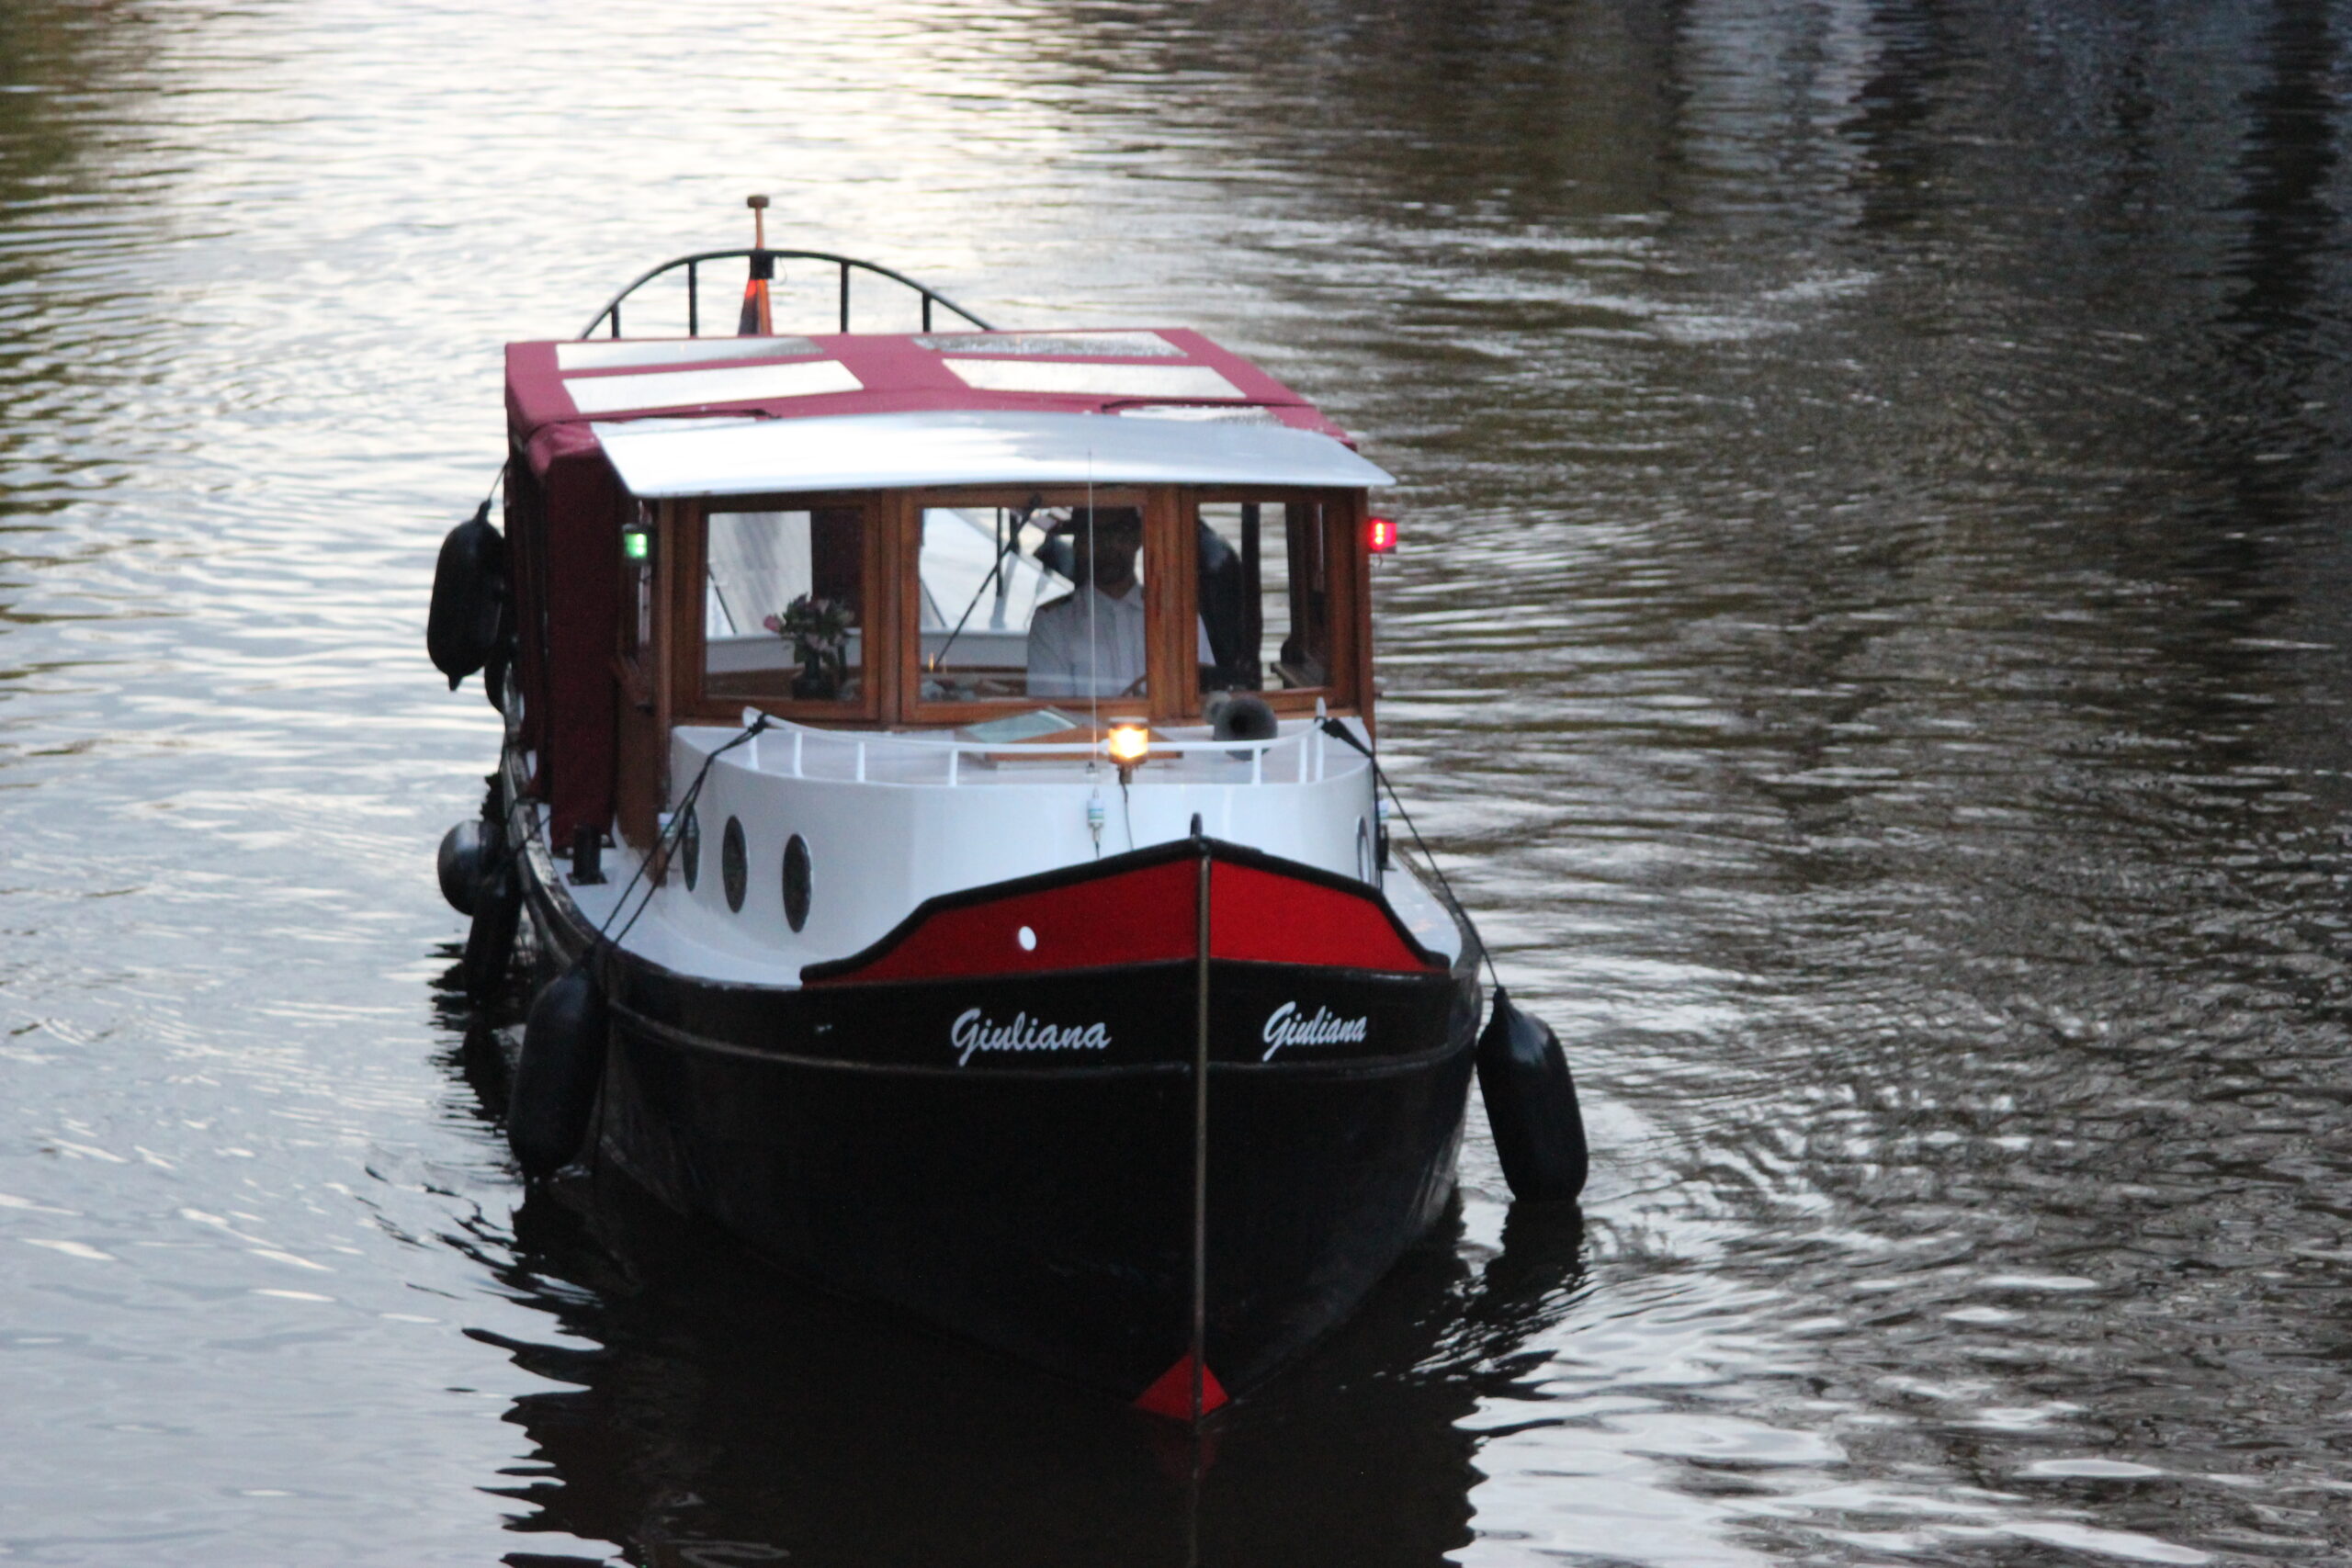 sebi boat tours amsterdam on an electric boat